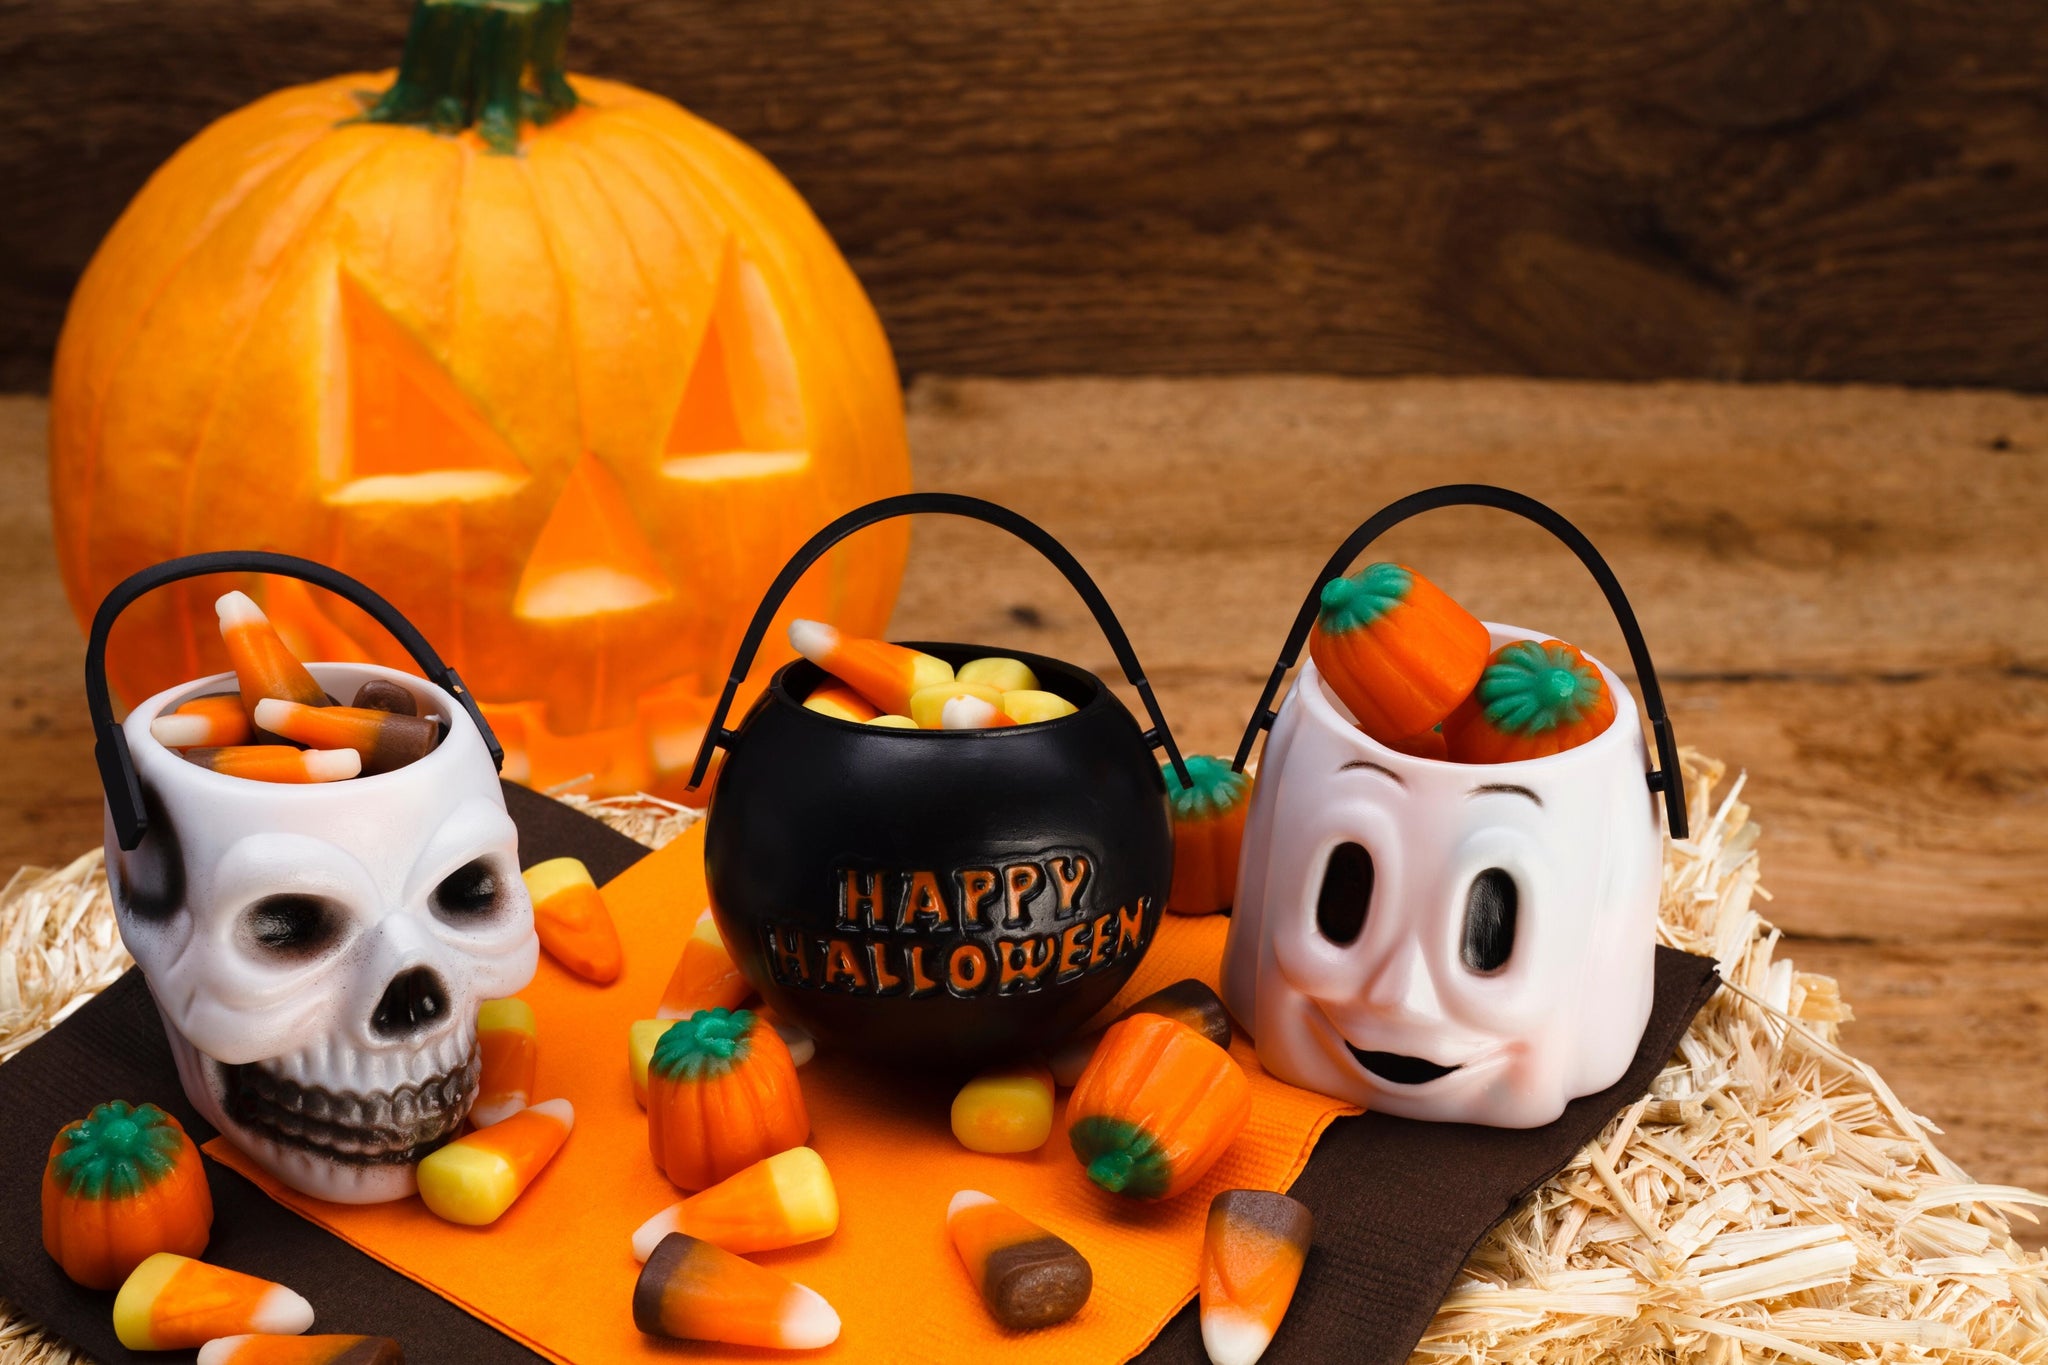 Halloween baskets filled with halloween corn and pumpkin candies